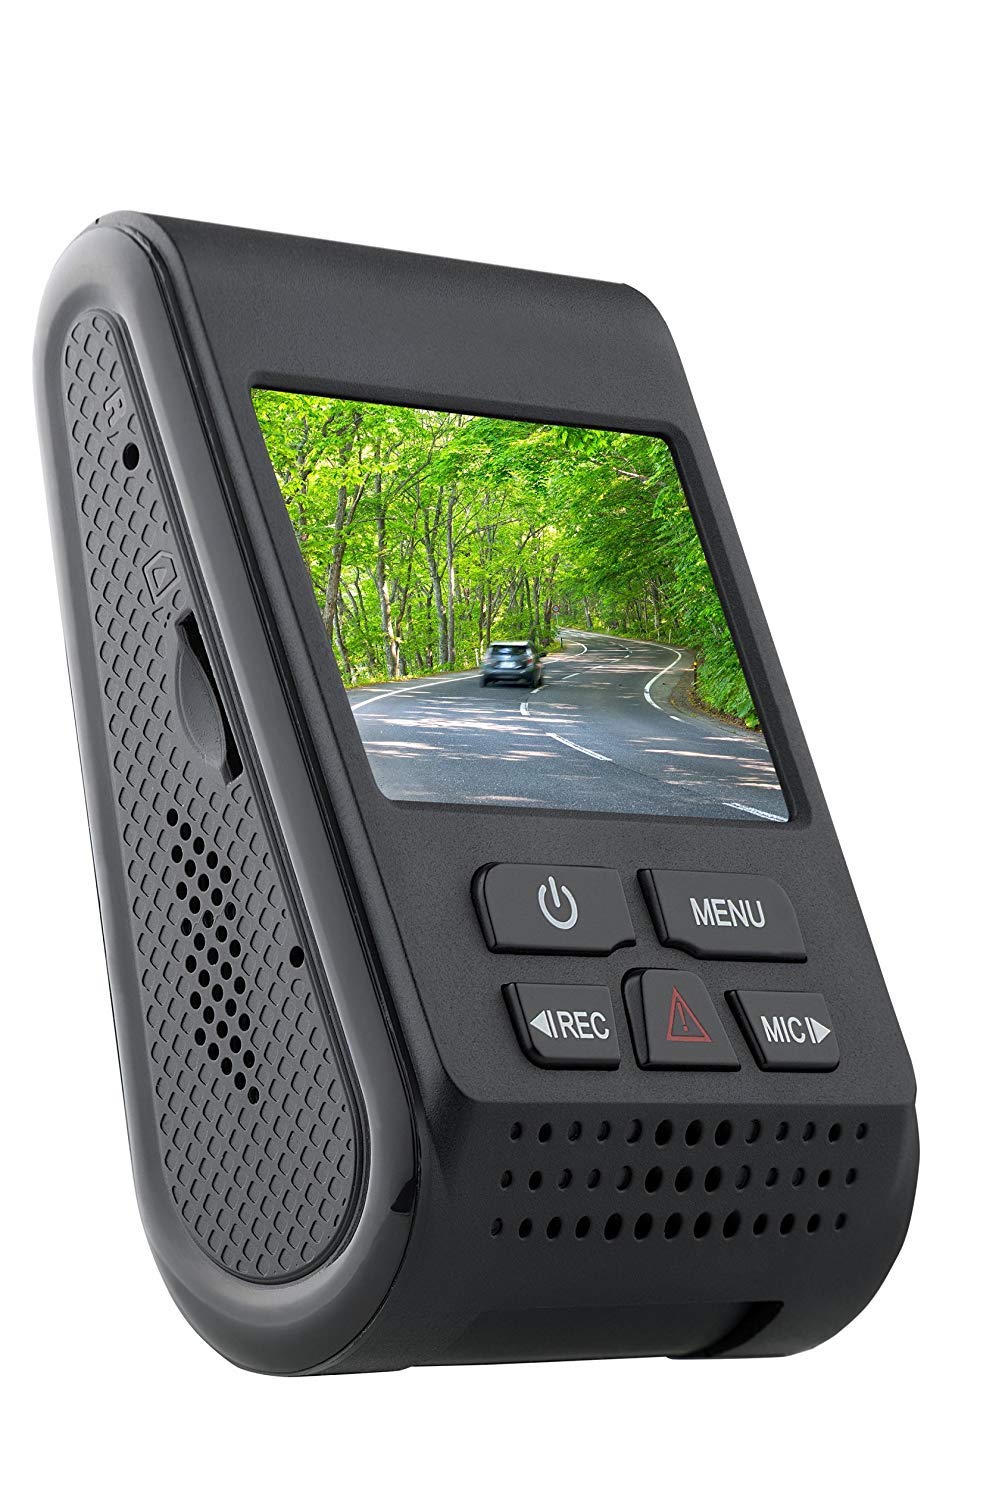 Book Cover Spytec A119 Version 2 Car dashcam 1440p@30 FPS, 1080P@60 FPS Dashboard Video Recorder w/ Night Vision G-Sensor Loop Recording